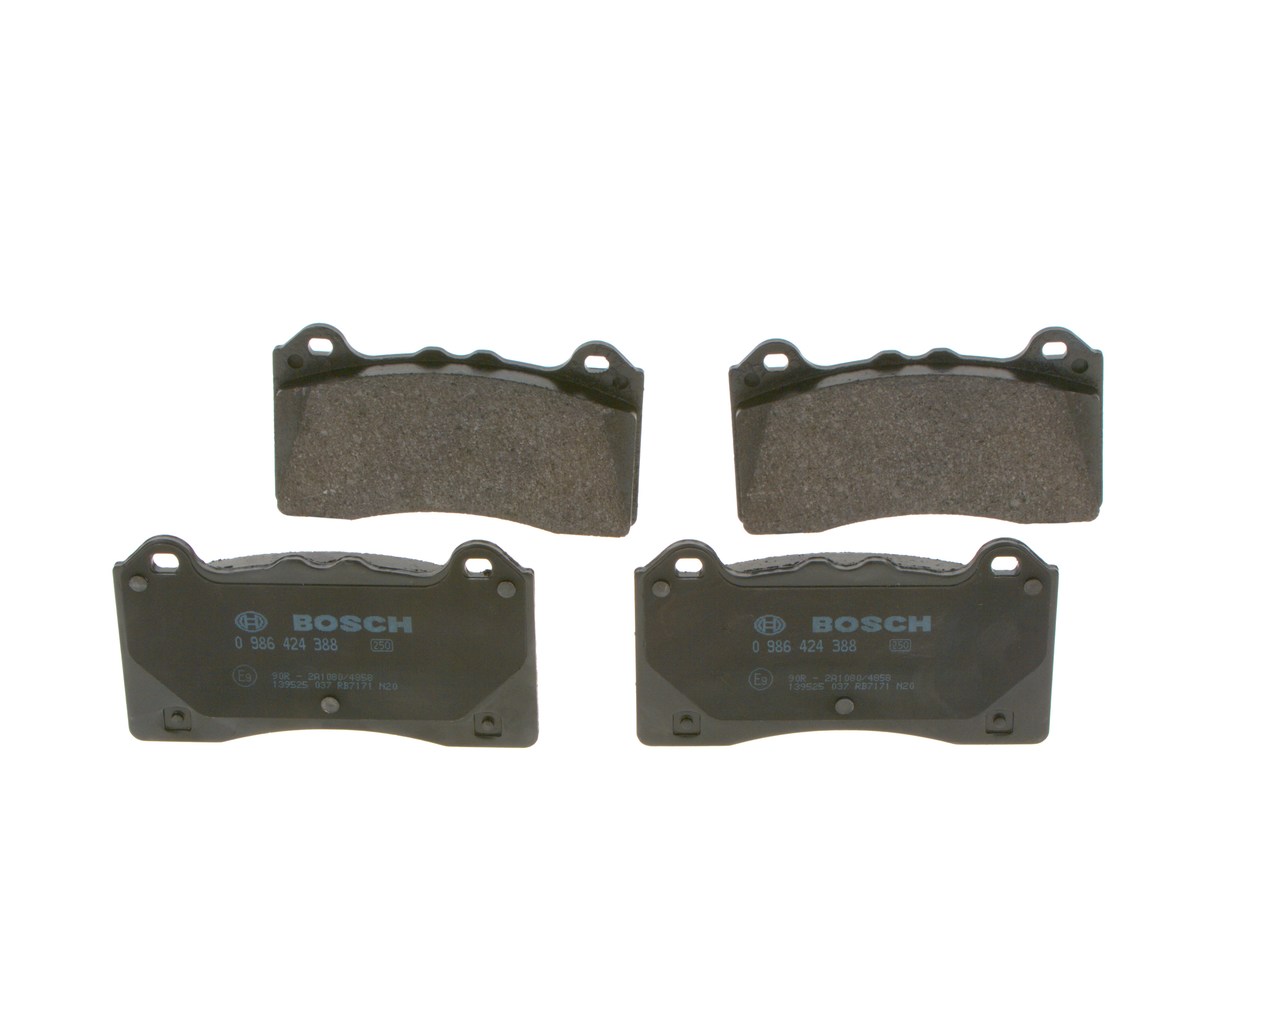 BOSCH 0 986 424 388 Brake pad set Low-Metallic, with integrated wear sensor